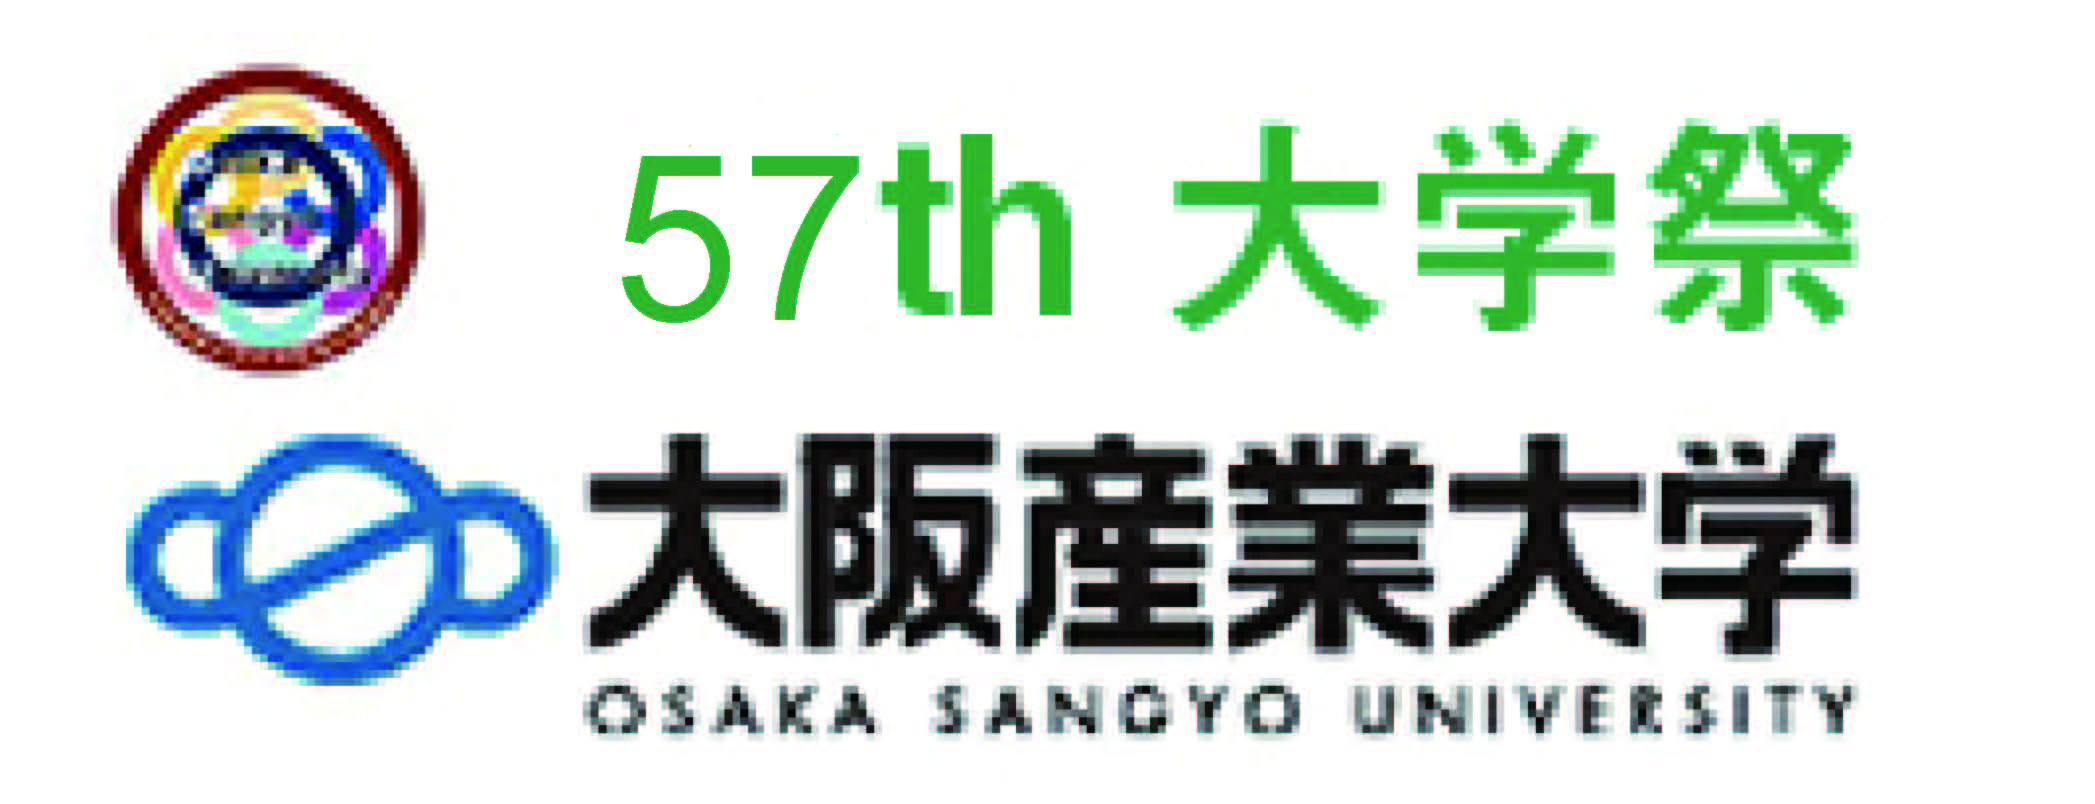 56th大学祭 大阪産業大学